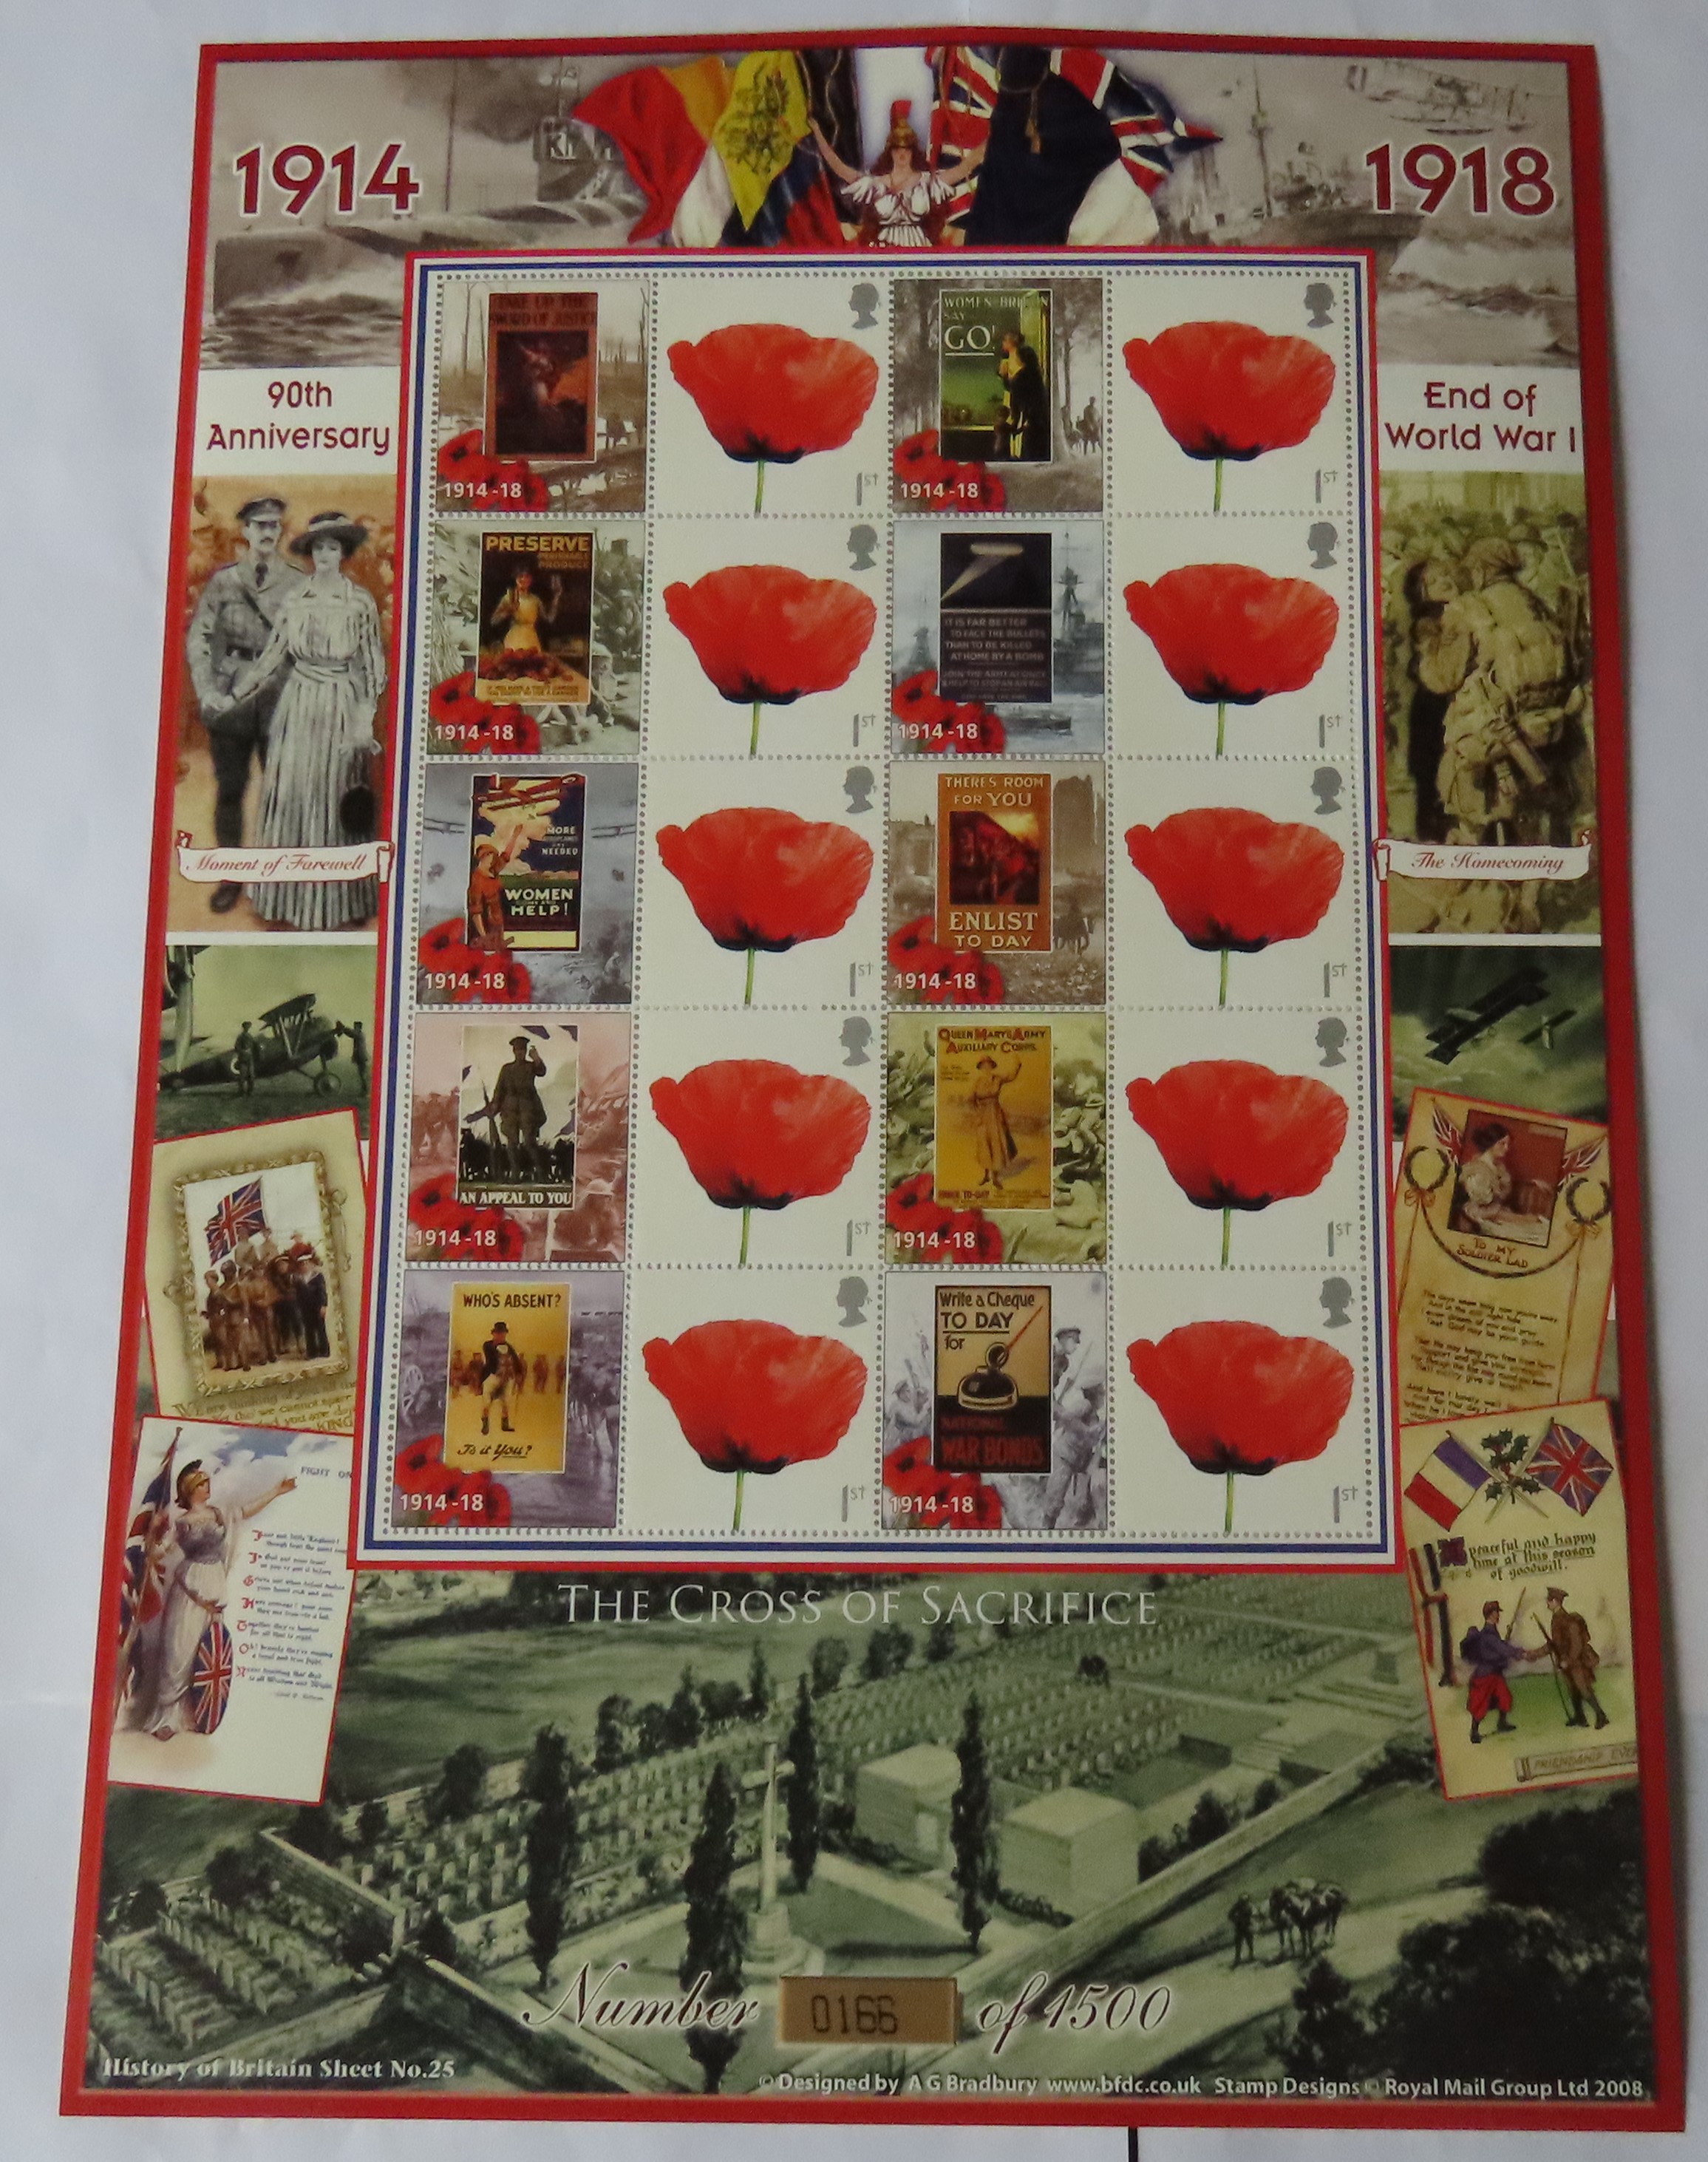 GB 2008 1914-1918 End of WWI 90th Anniversary, Royal Mail / Bradbury History of Britain Sheet no 25.